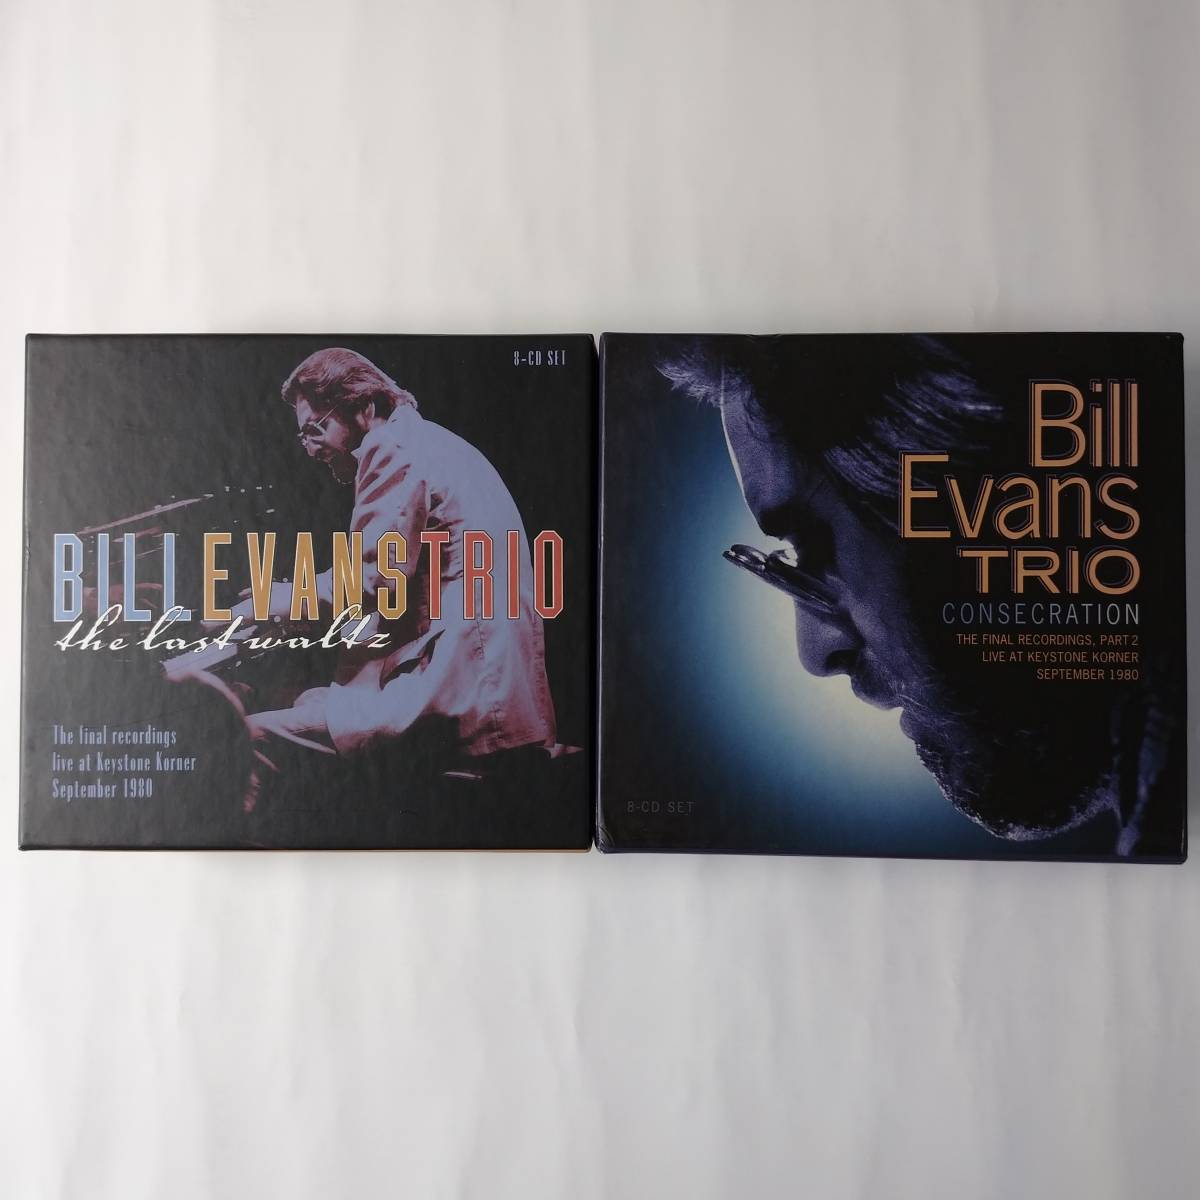 ＜CD＞ ビル・エヴァンス BILL EVANS [THE LAST WALTZ & CONSECRATION] 8-DISC CD × 2 セット